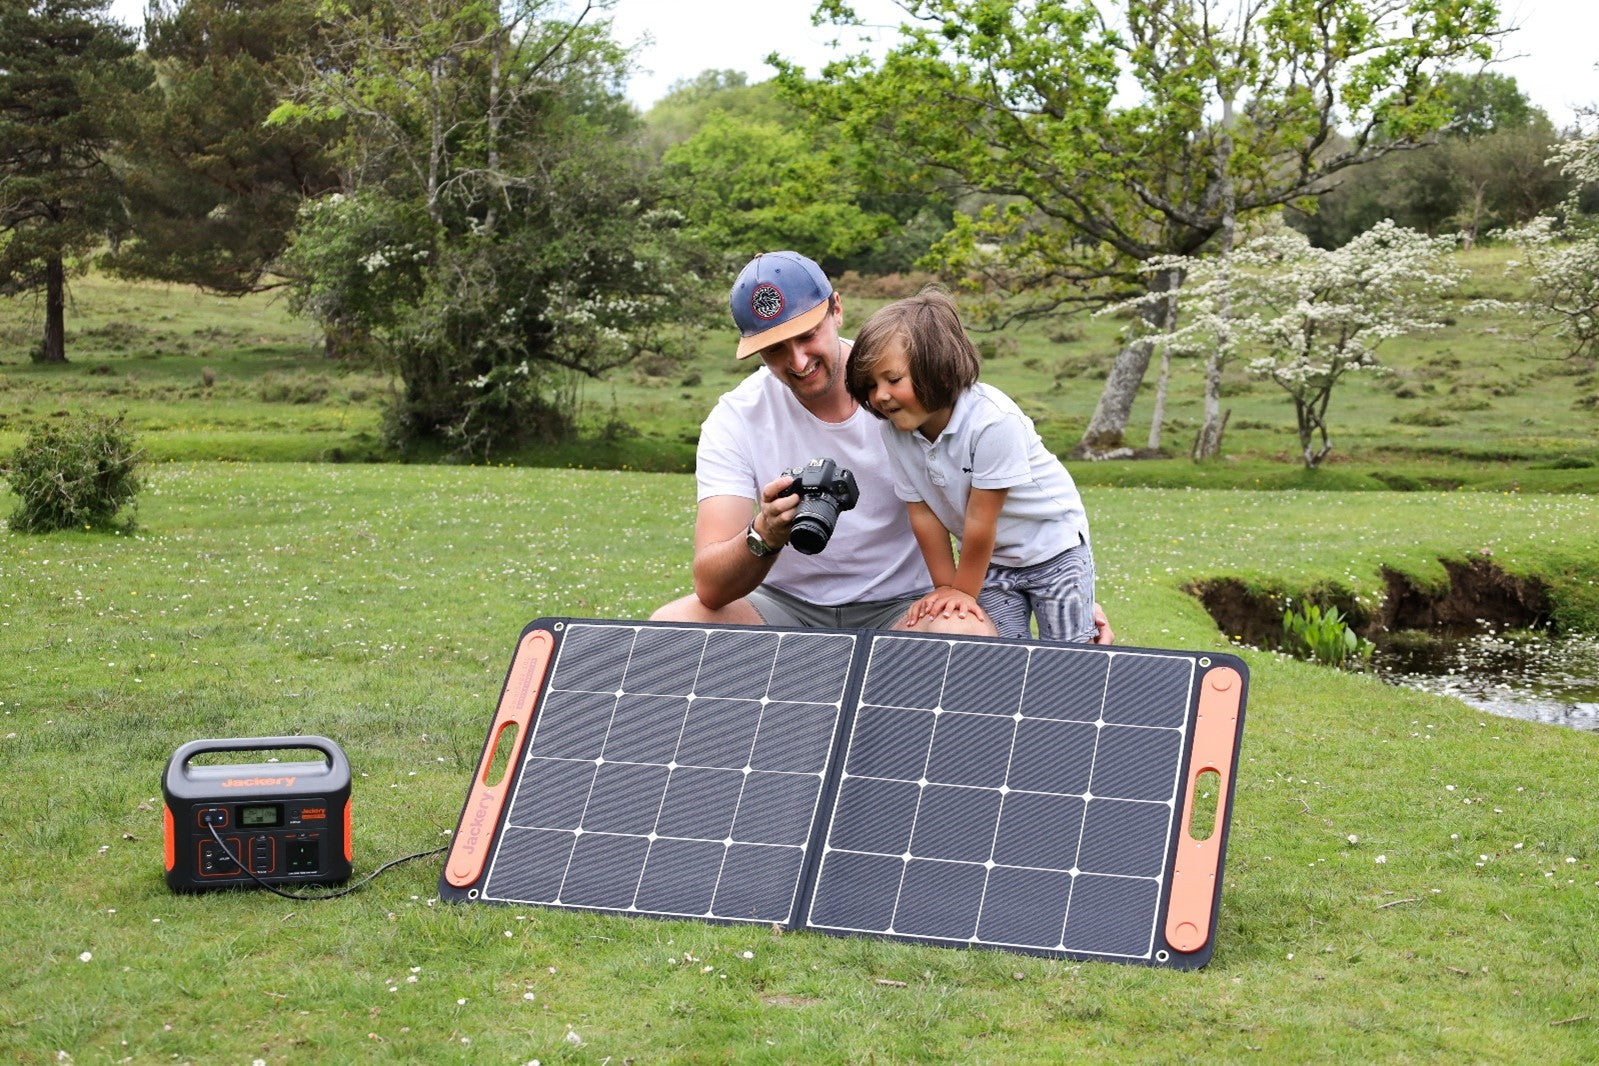 Jackery solar generator 500 for dispersed camping